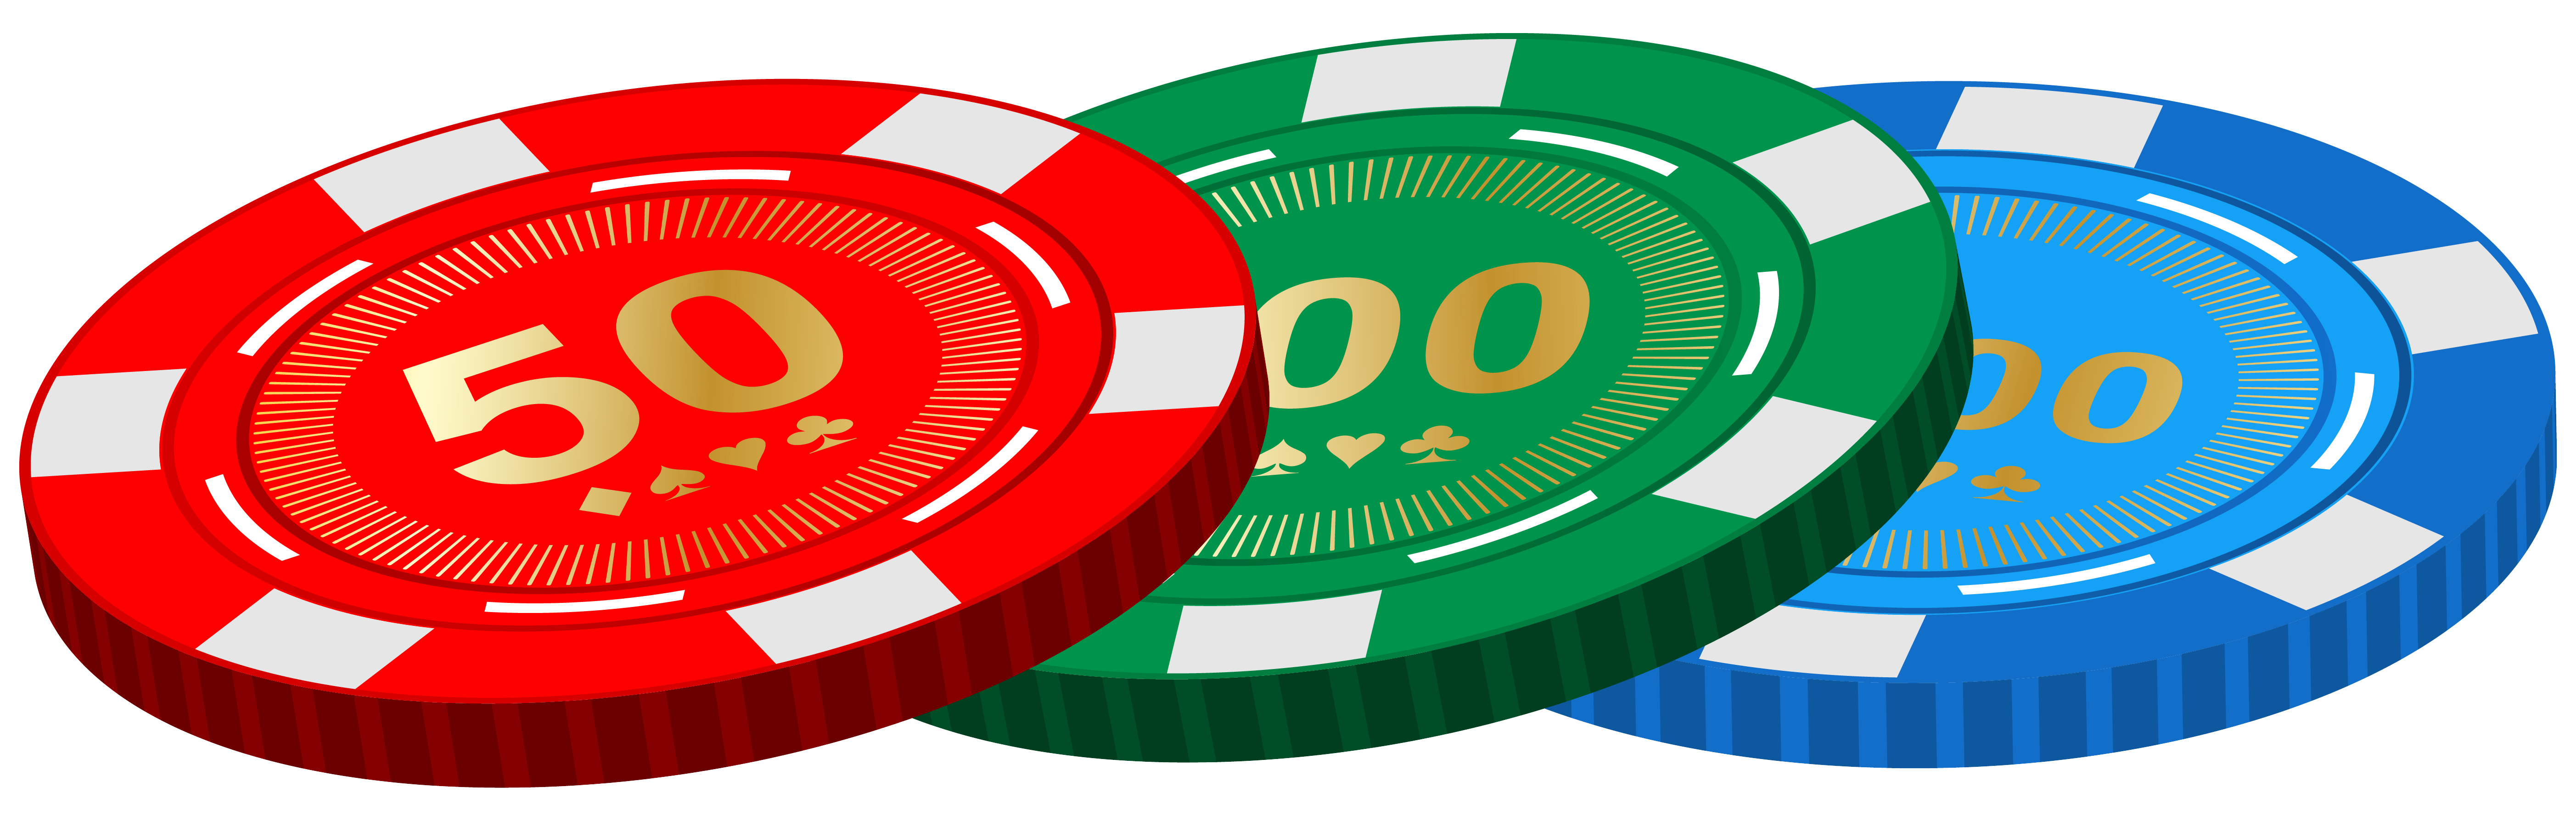 Website clipart transparent. Casino poker chips png